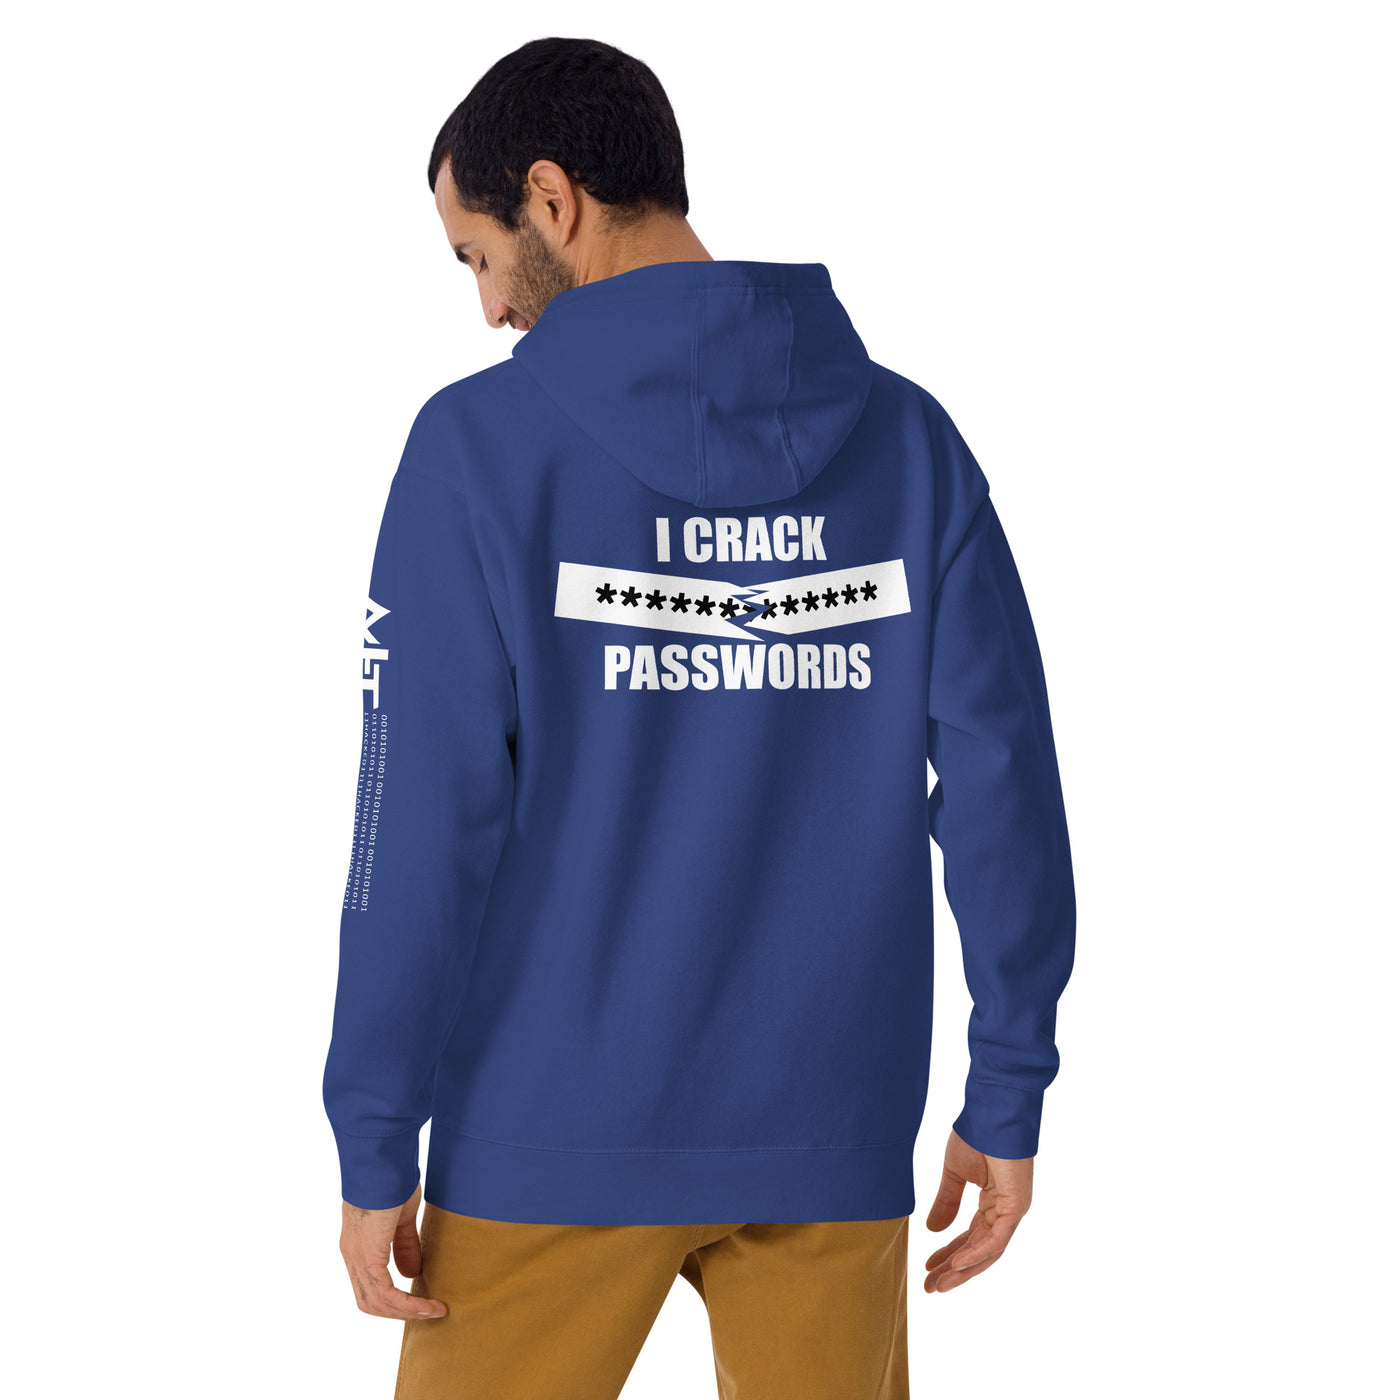 I crack passwords - Unisex Hoodie (back print)